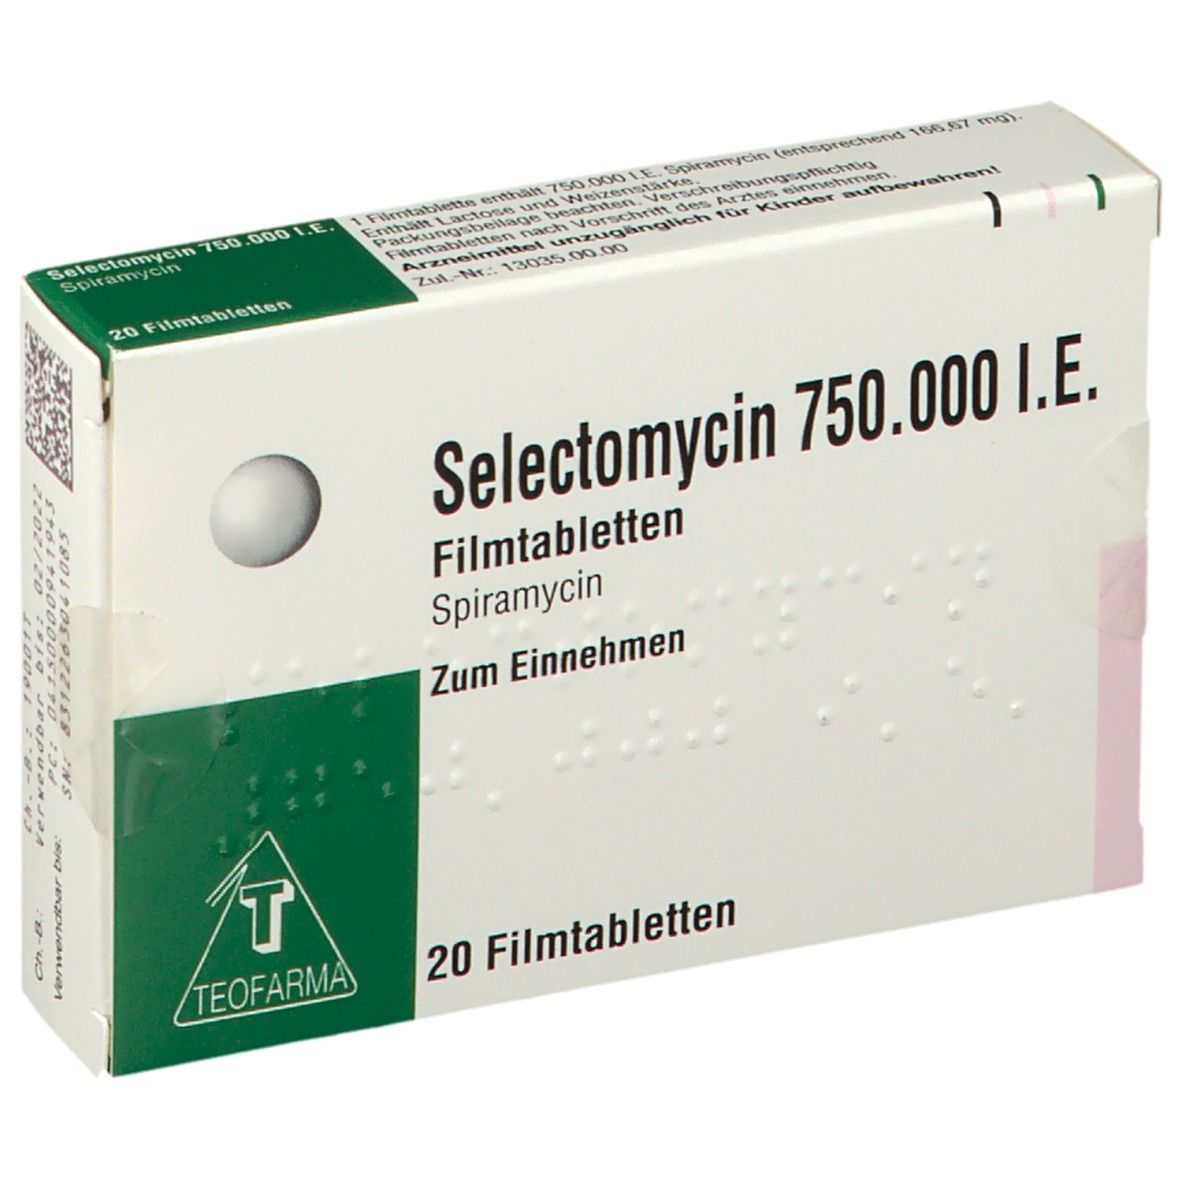 Selectomycin 750.000 I.E.